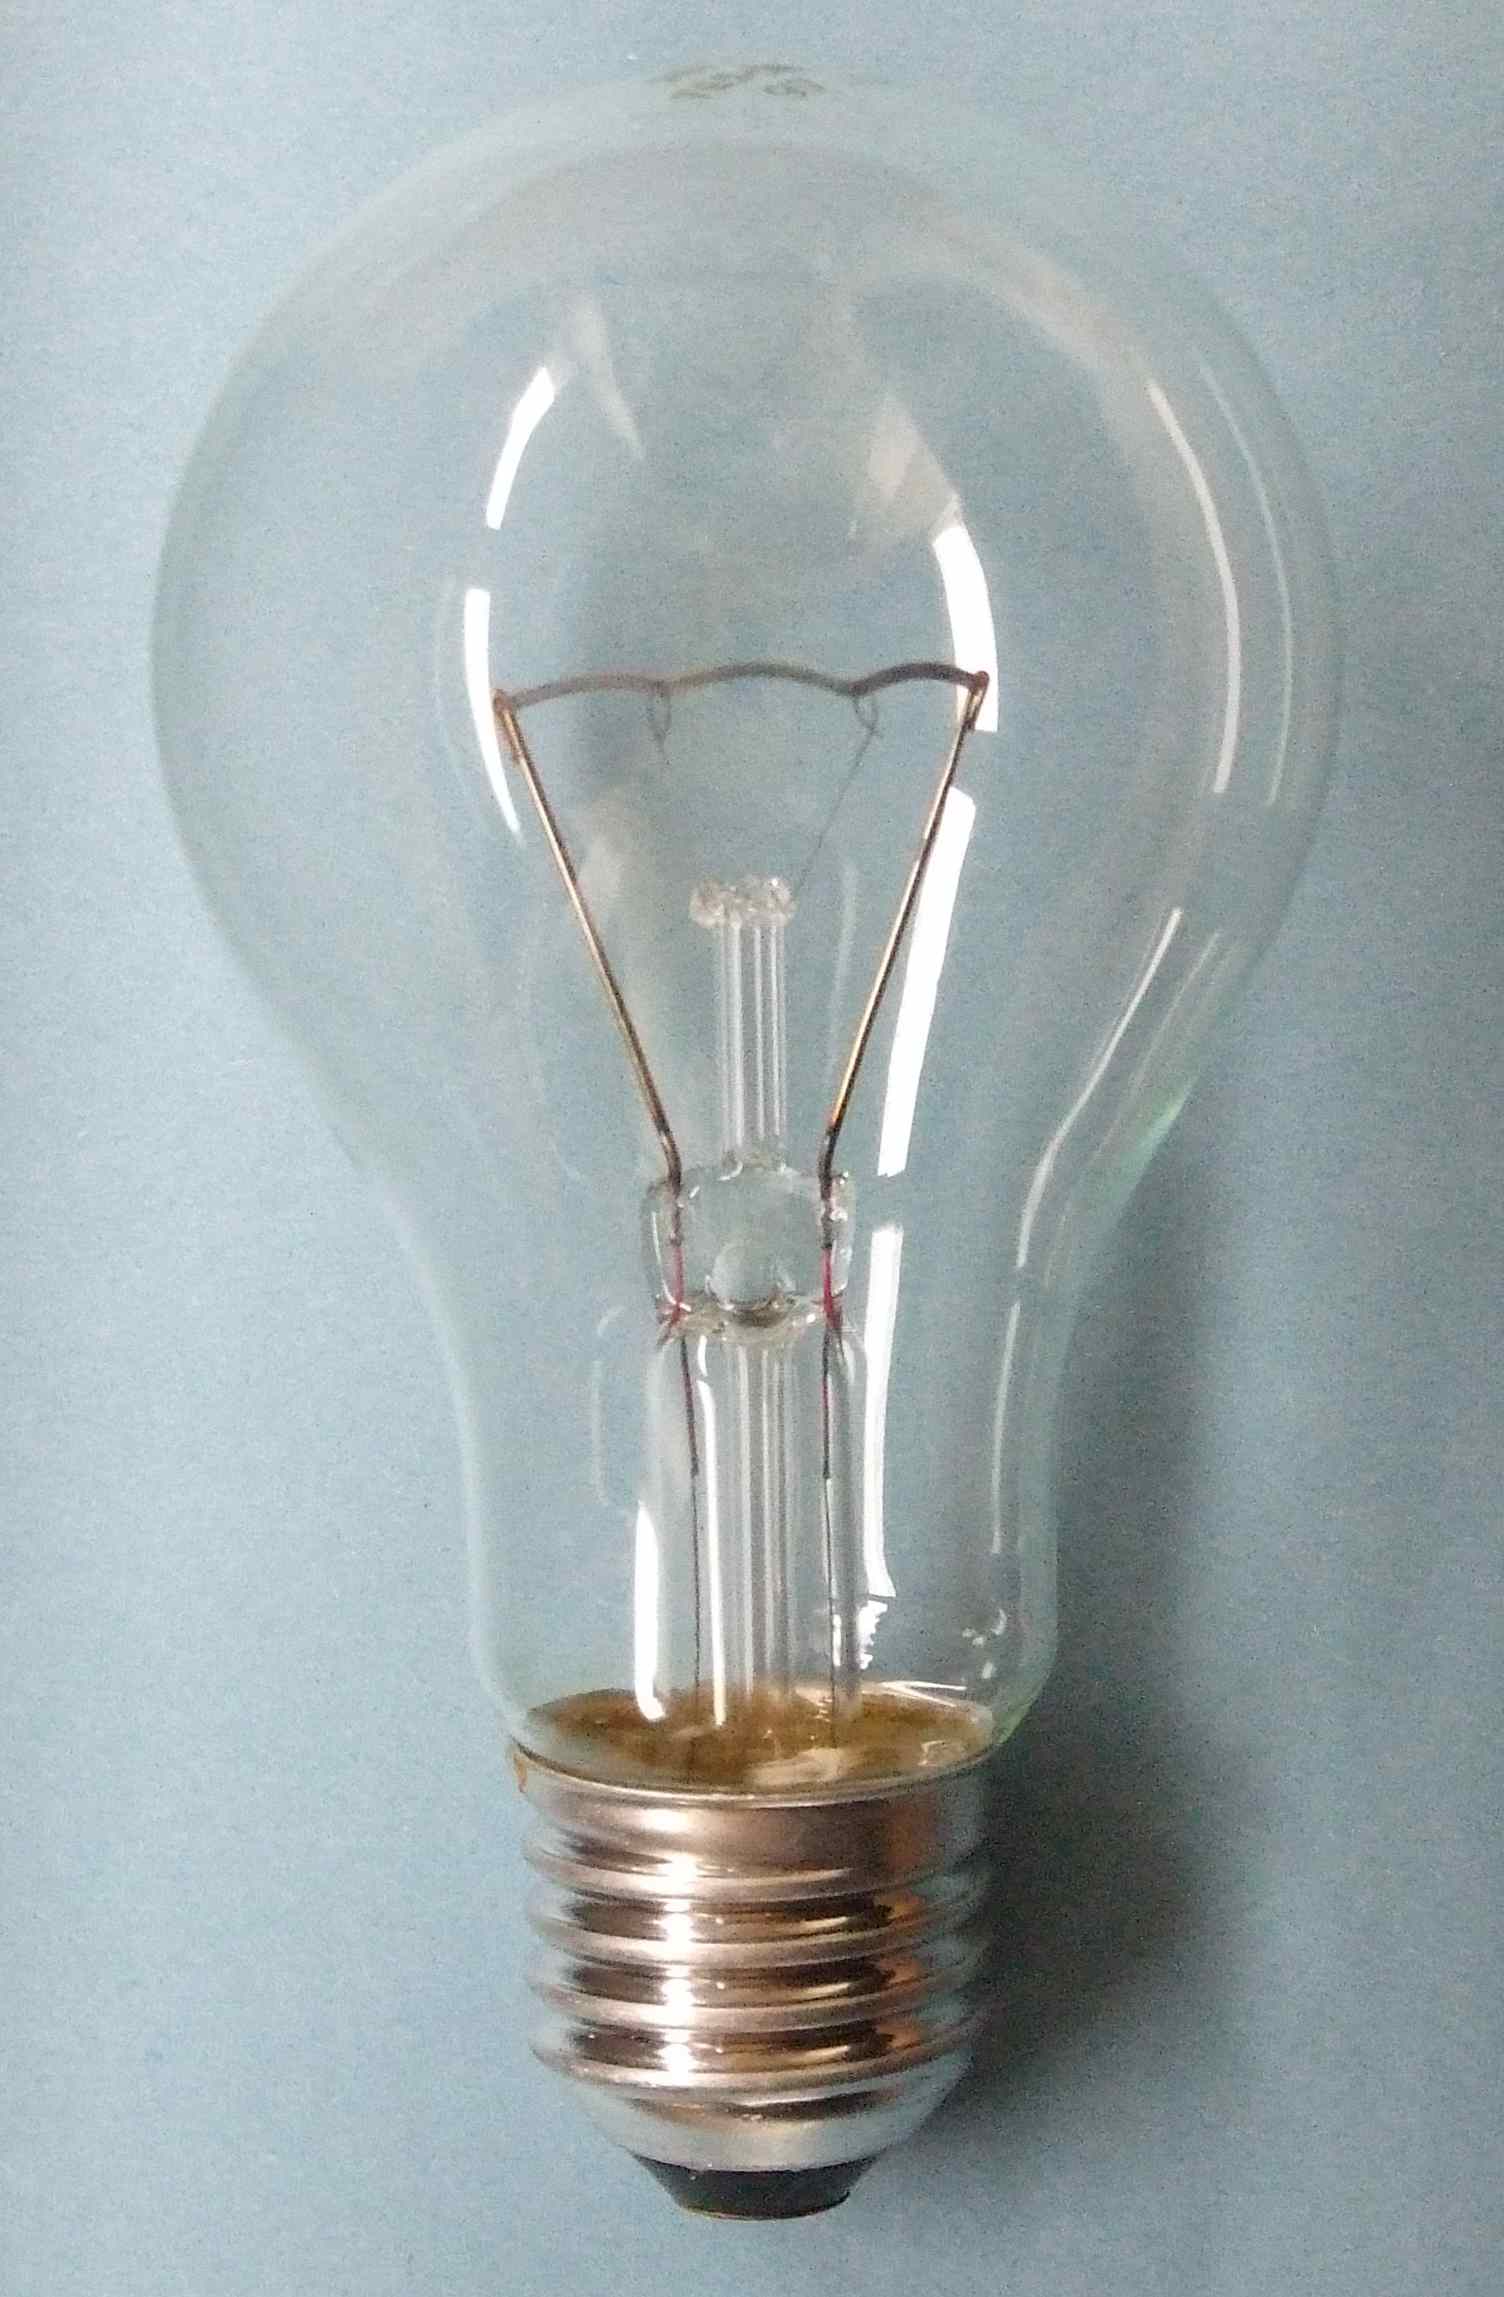 Tes-lamp žárovka 150W E27 240V